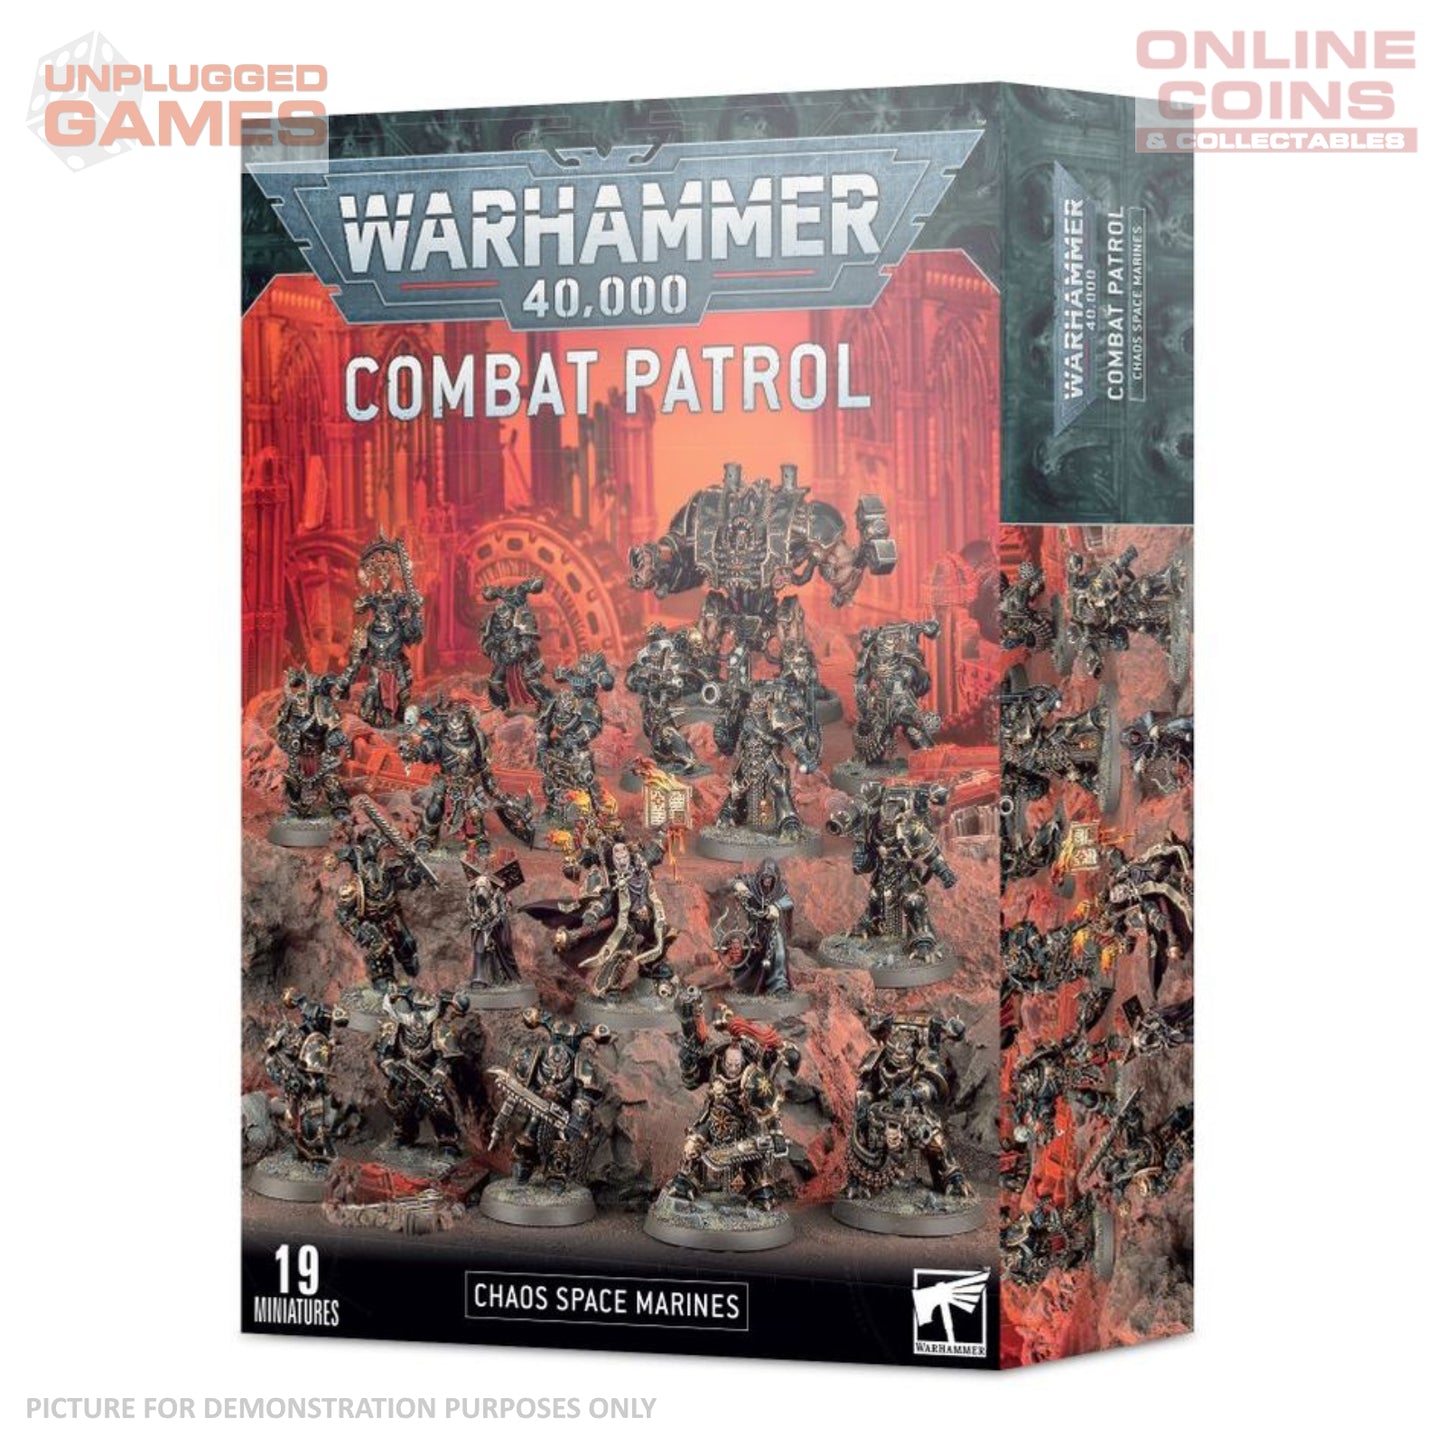 Warhammer 40,000 - Combat Patrol Chaos Space Marines